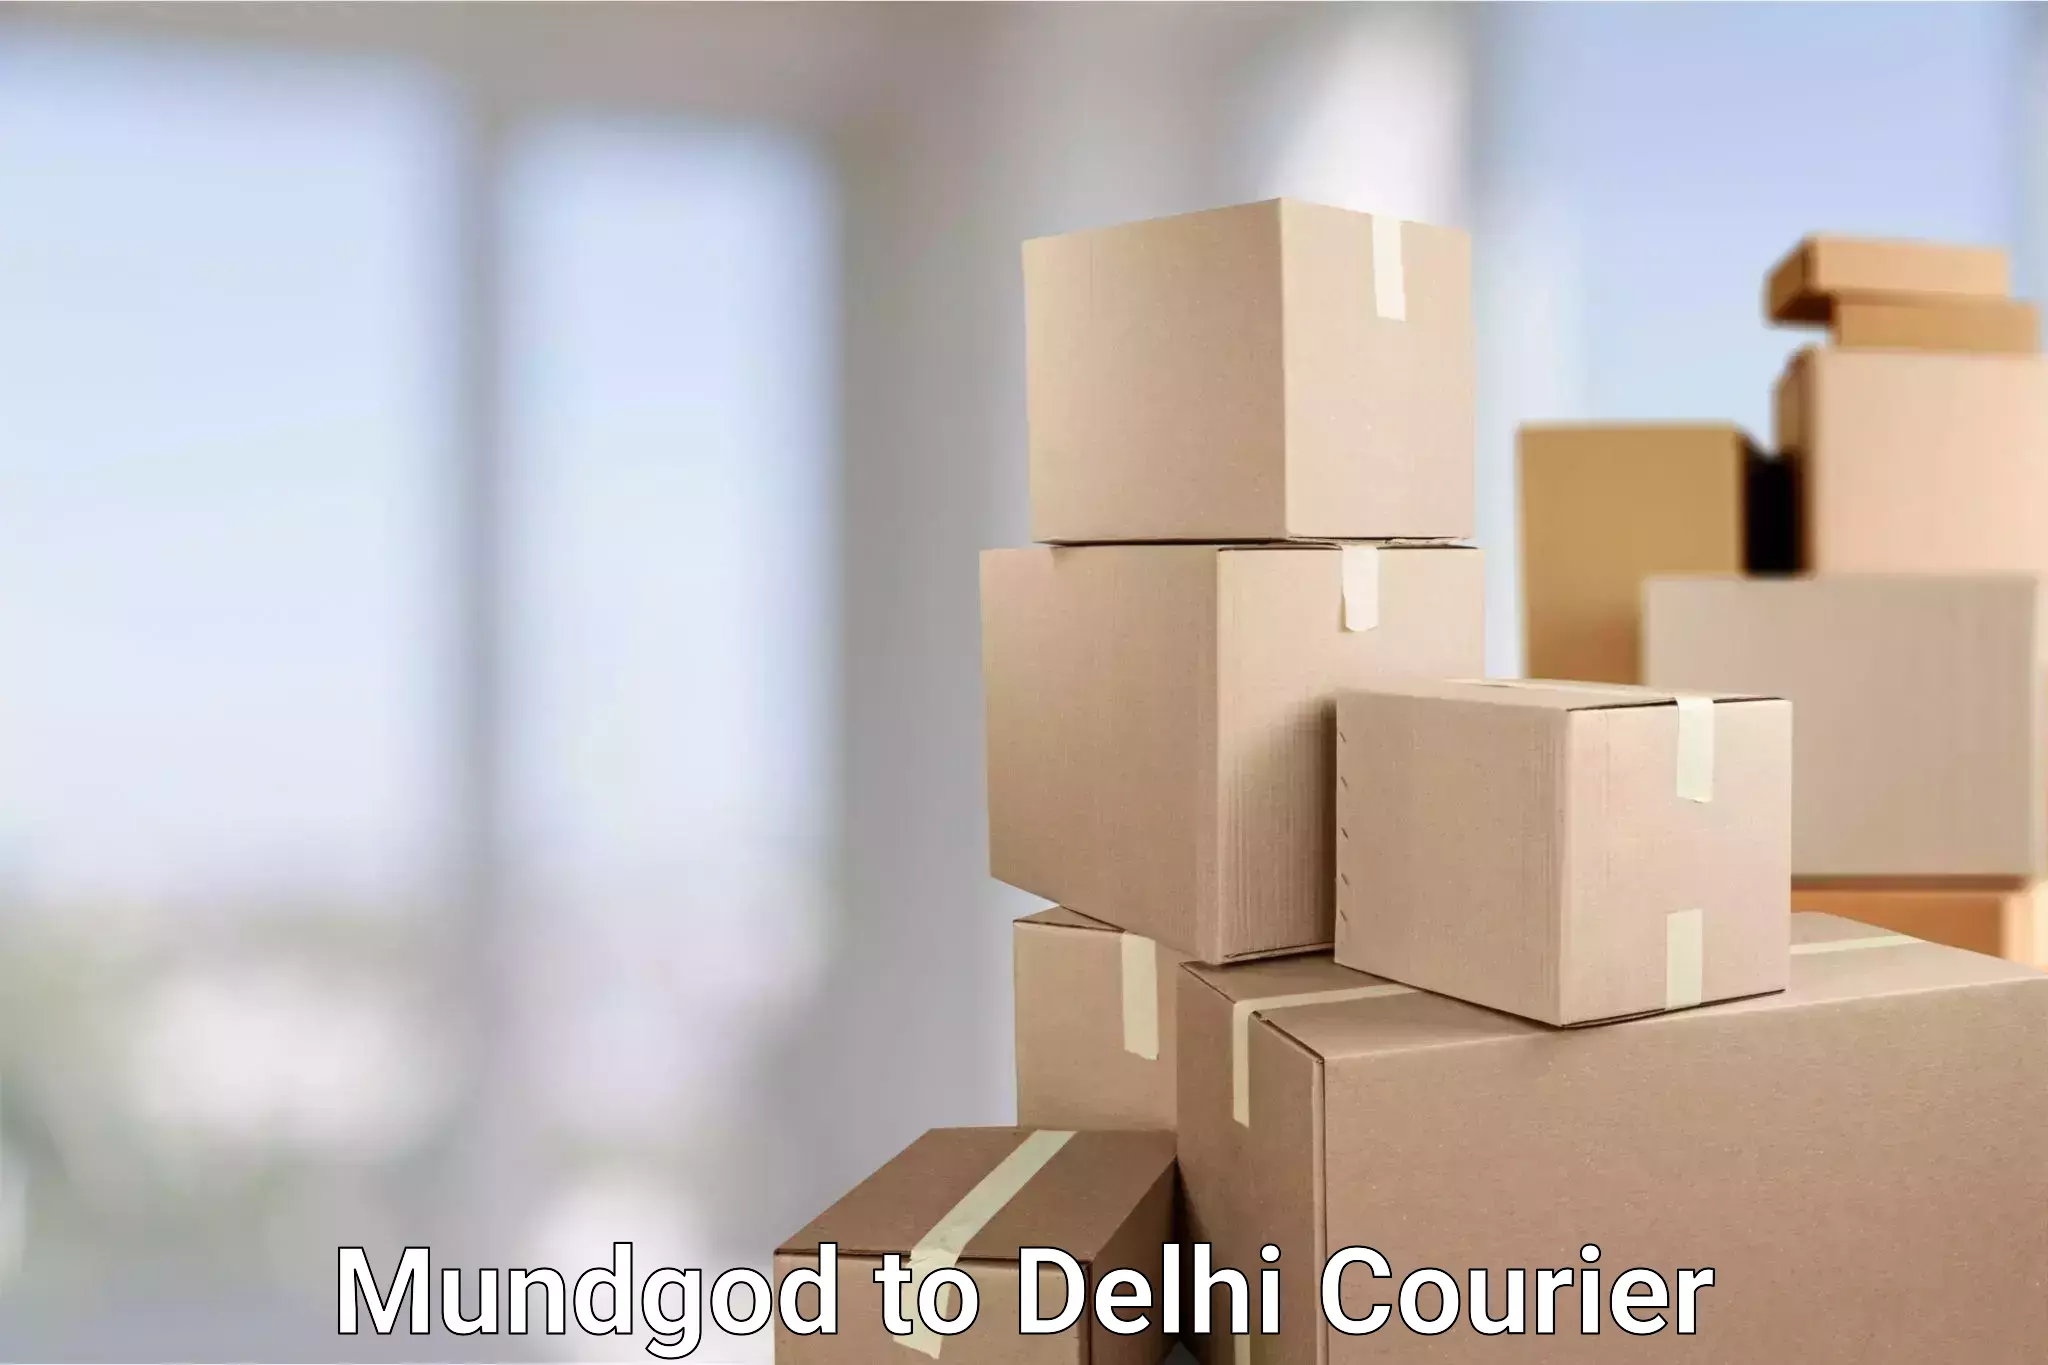 Express delivery capabilities Mundgod to Delhi